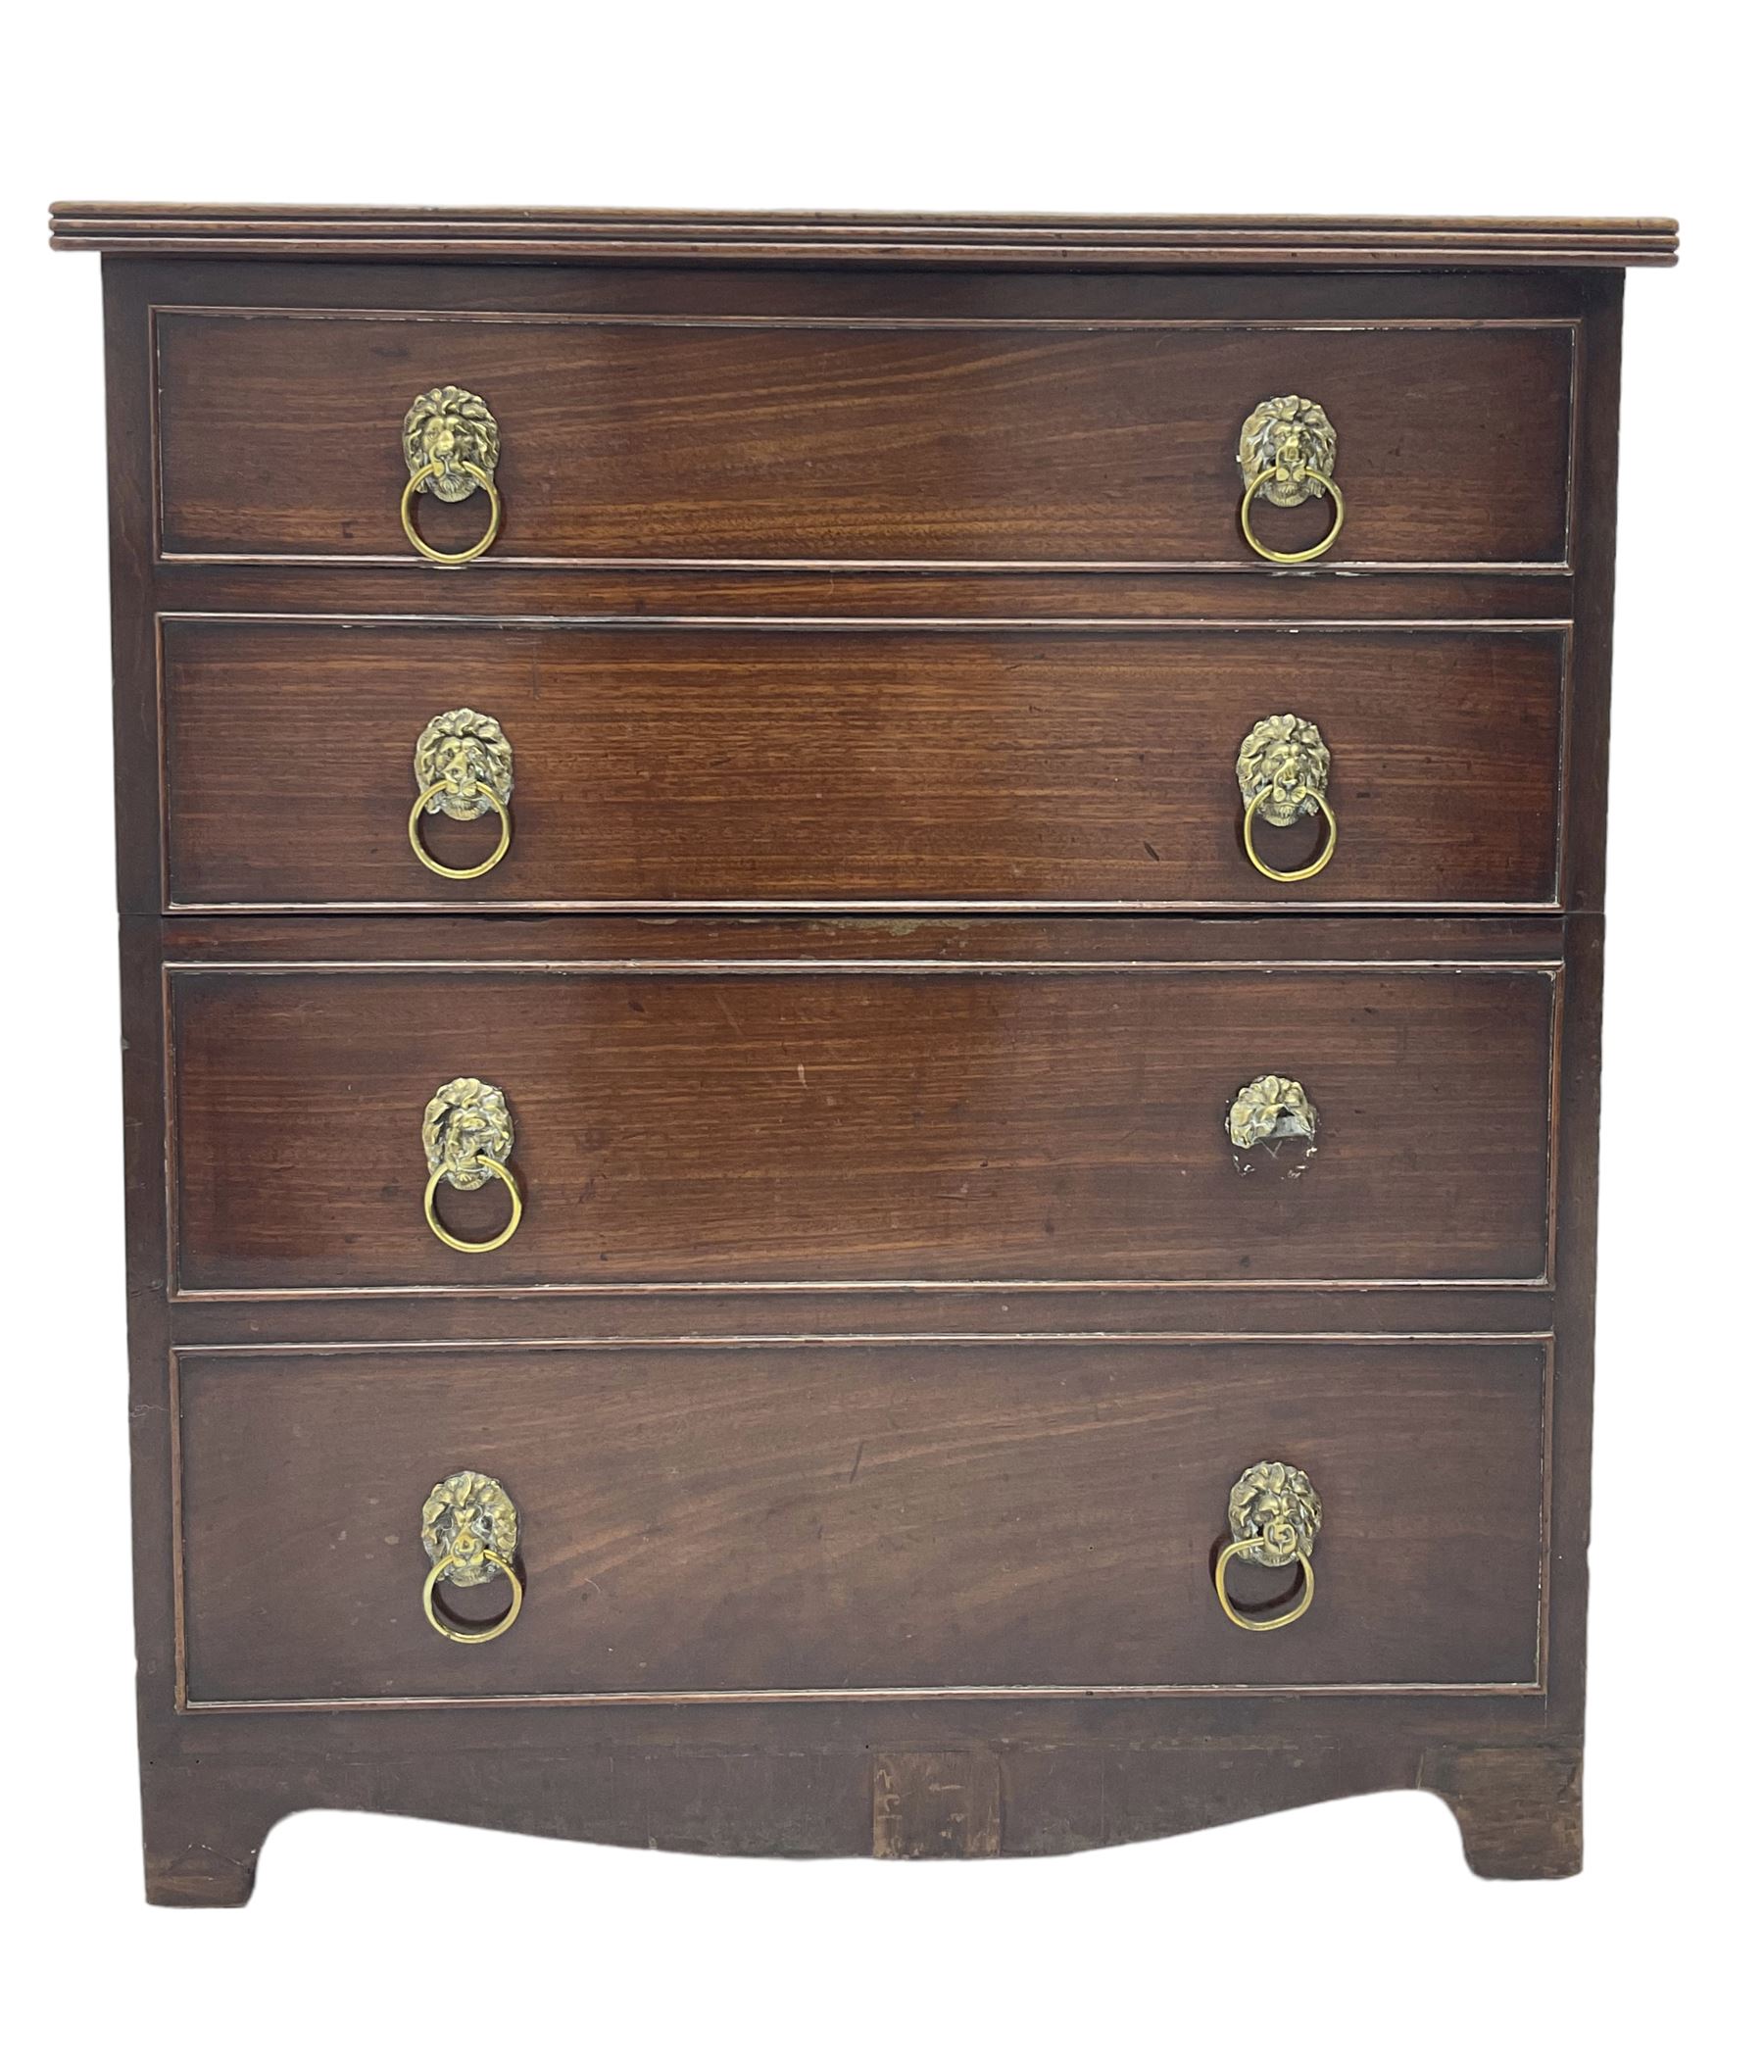 Early 19th century mahogany commode chest